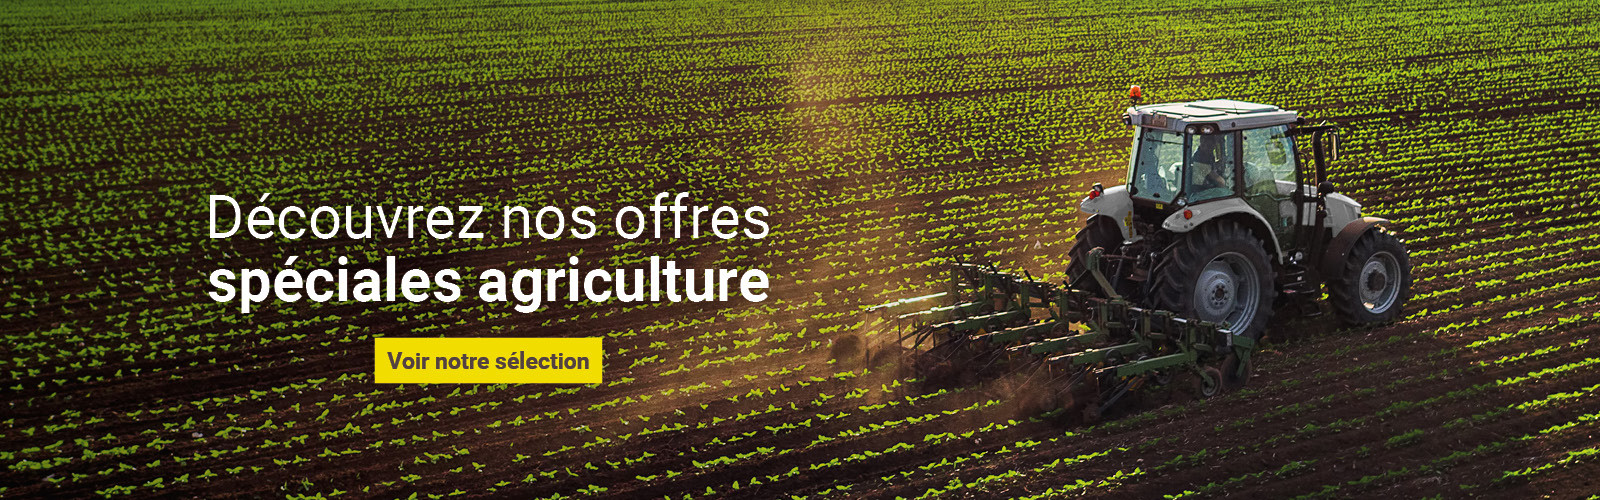 AGRI 01 - Offres spéciales agricultures